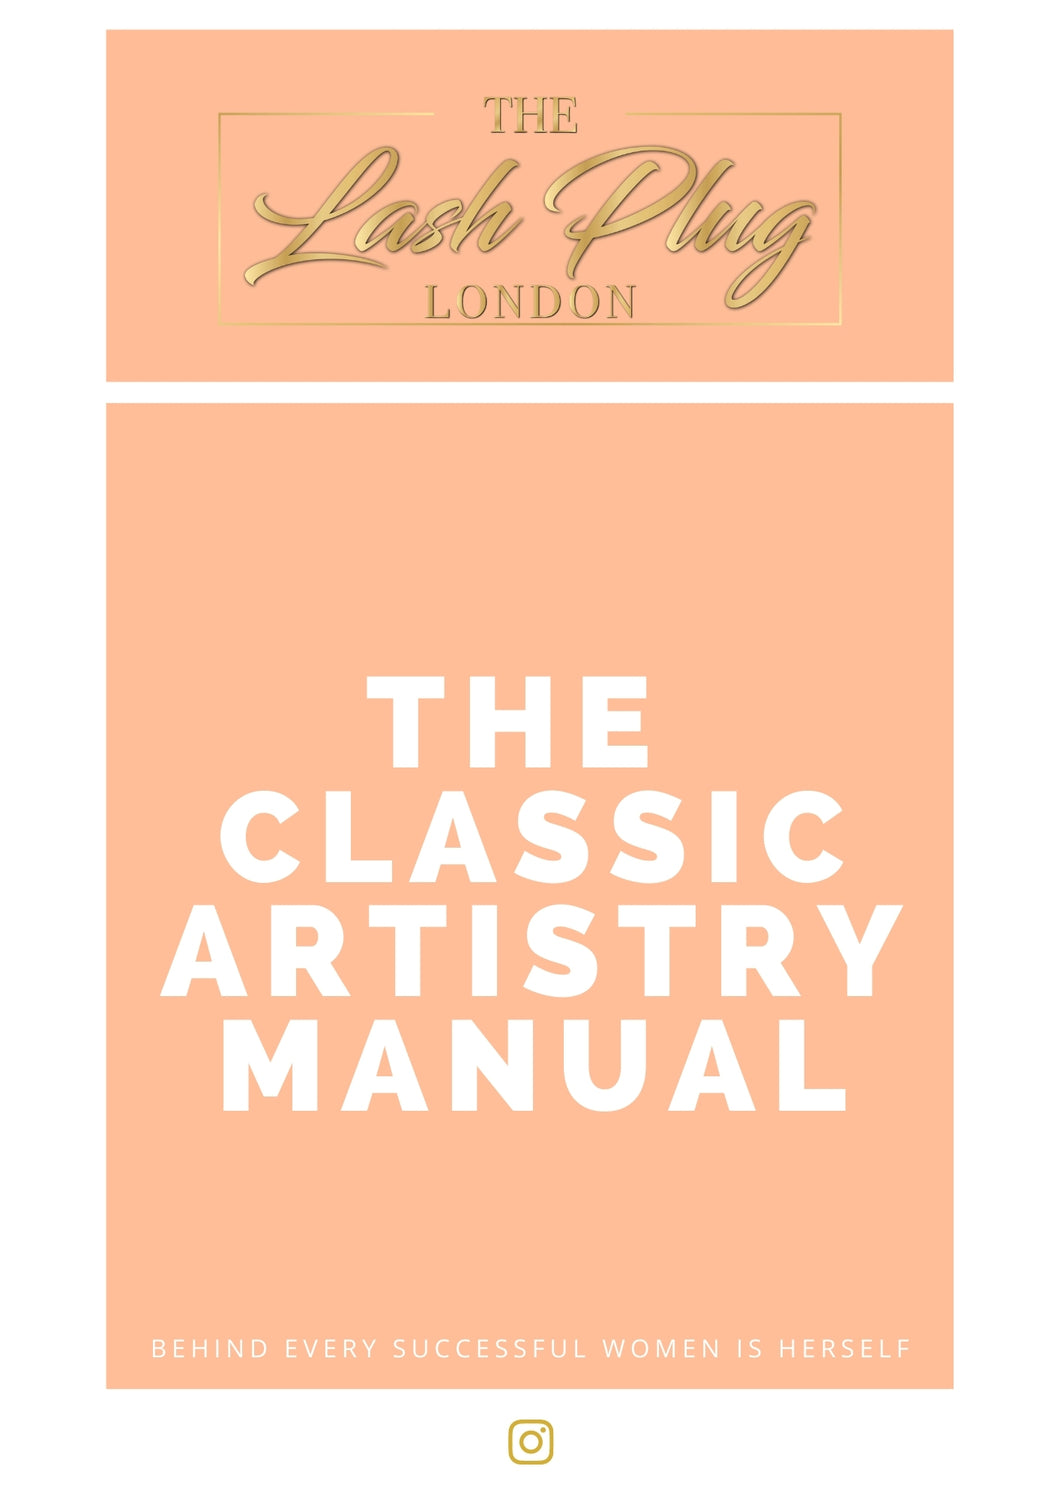 Classic Lash Digital Manual - The Lash Plug London